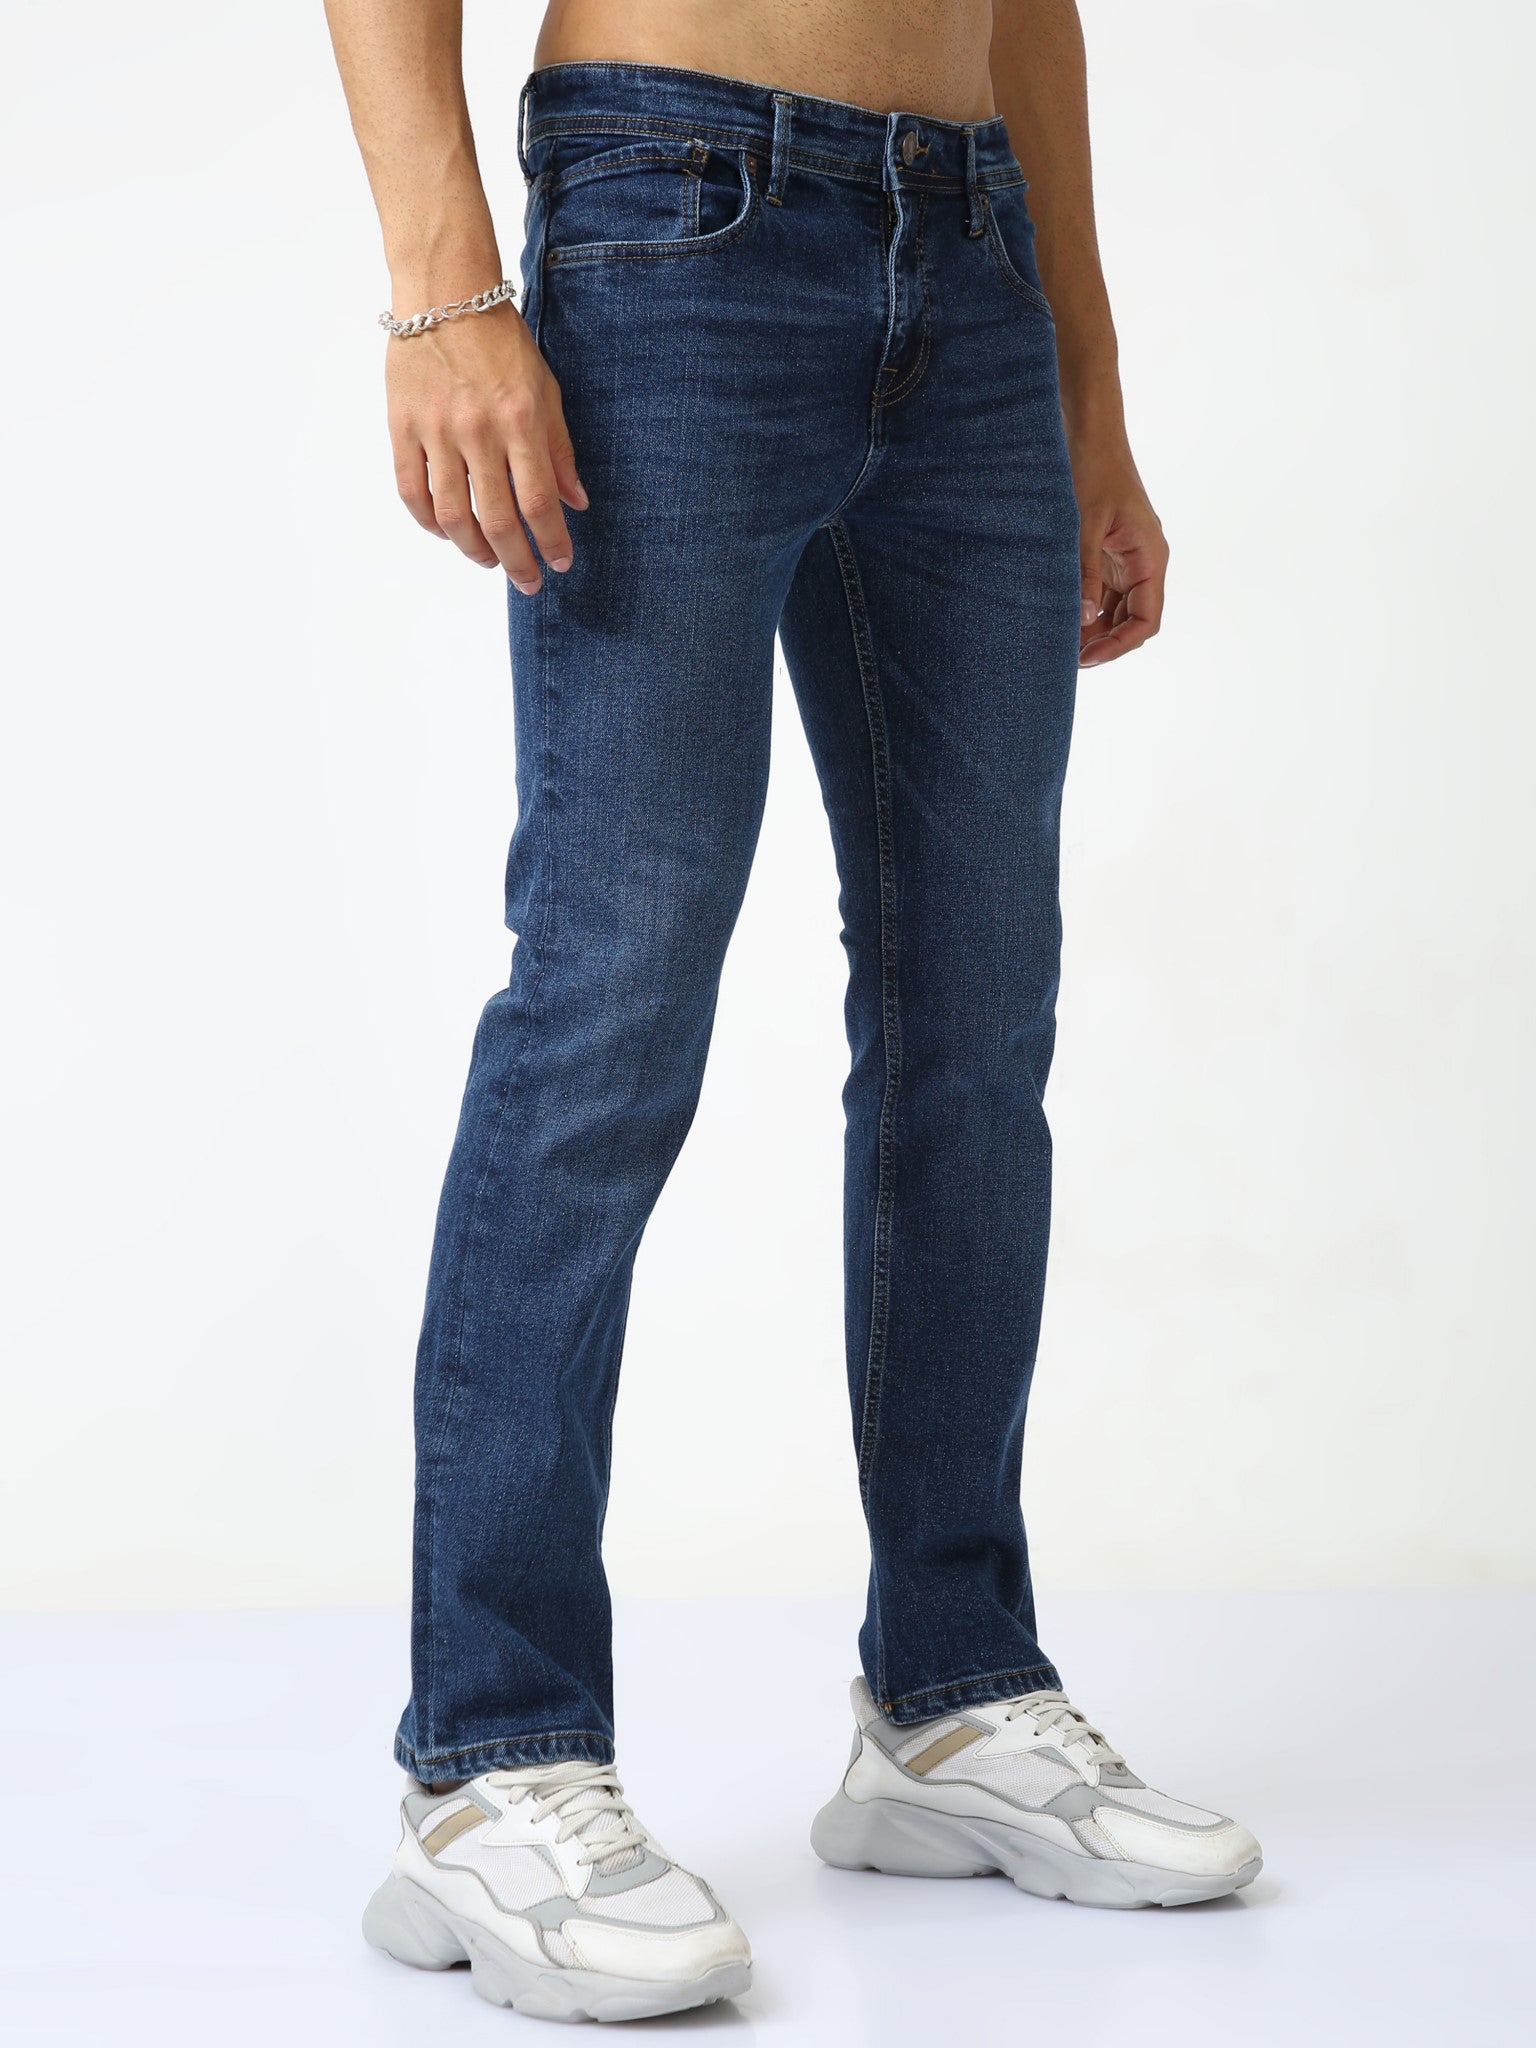 Xander Light Dark Blue Loose Jeans for Men 